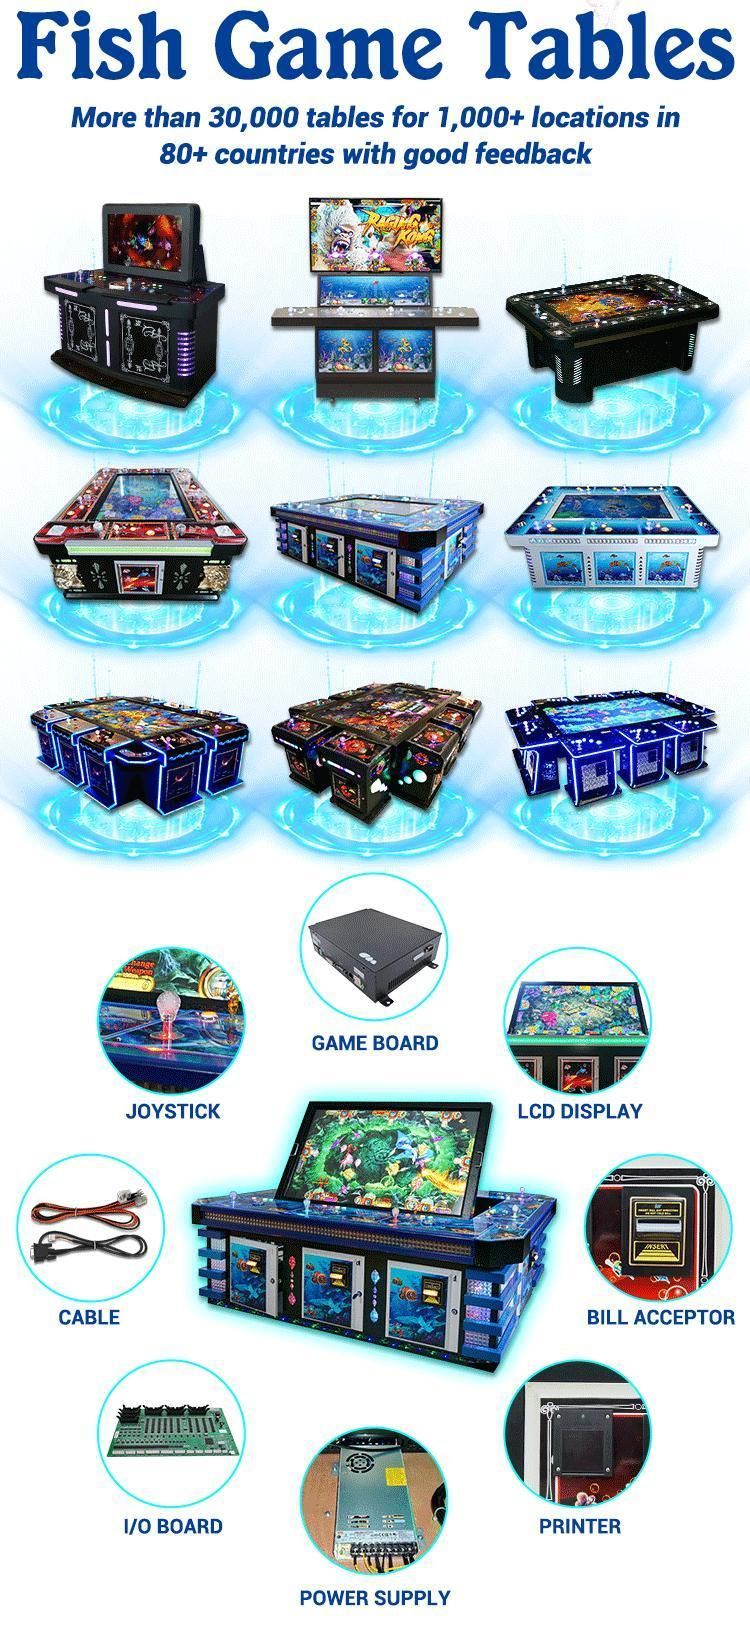 Arcade Igs Ocean King 3 Buffalo Thunder 2 Video Fish Game Table Games Machine Game Kits